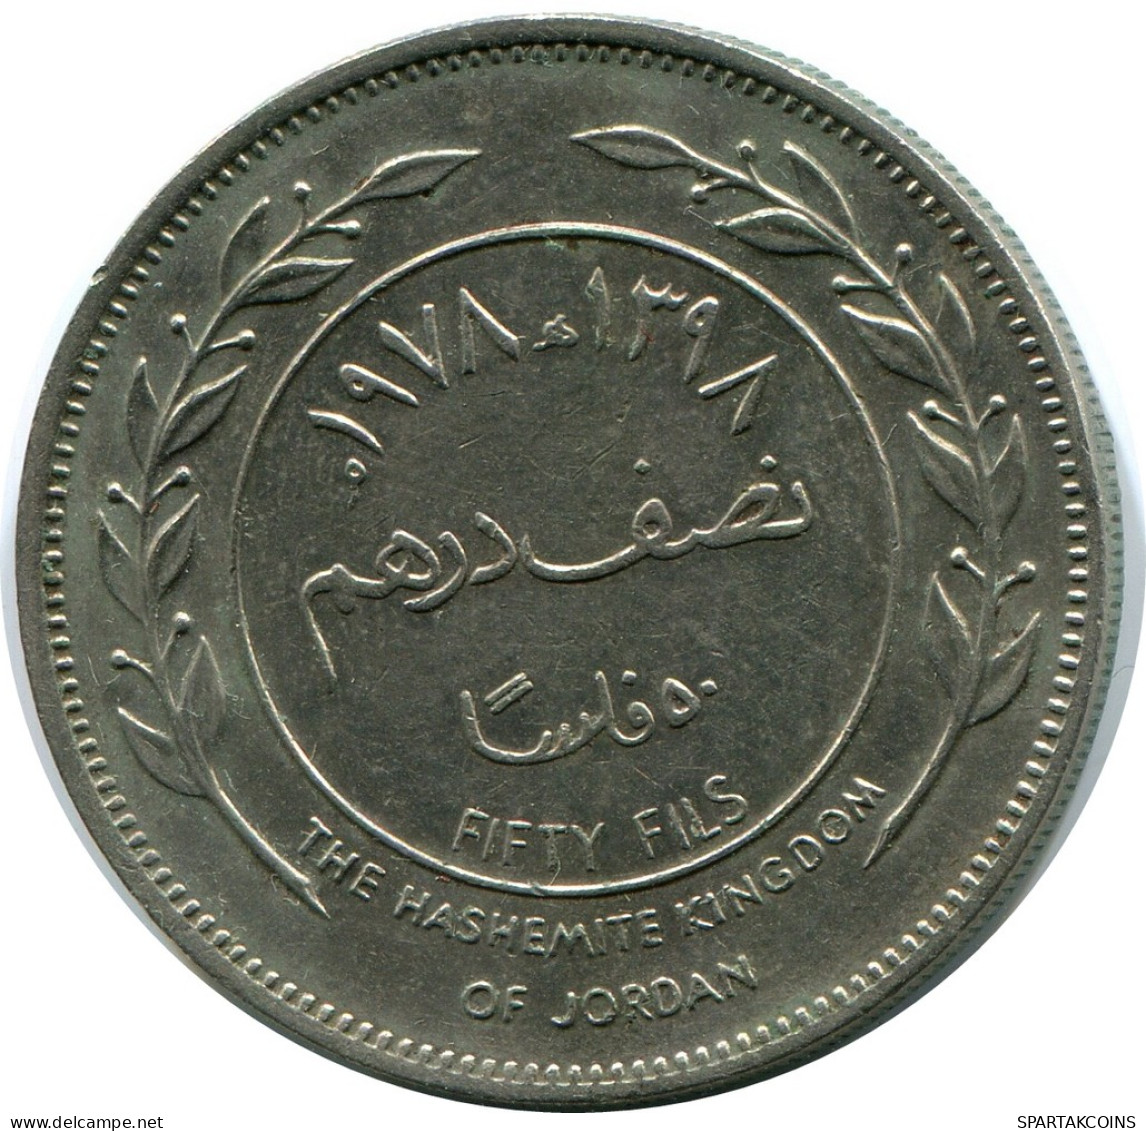 ½ DIRHAM / 50 FILS 1978 JORDAN Coin #AP074.U - Jordanien